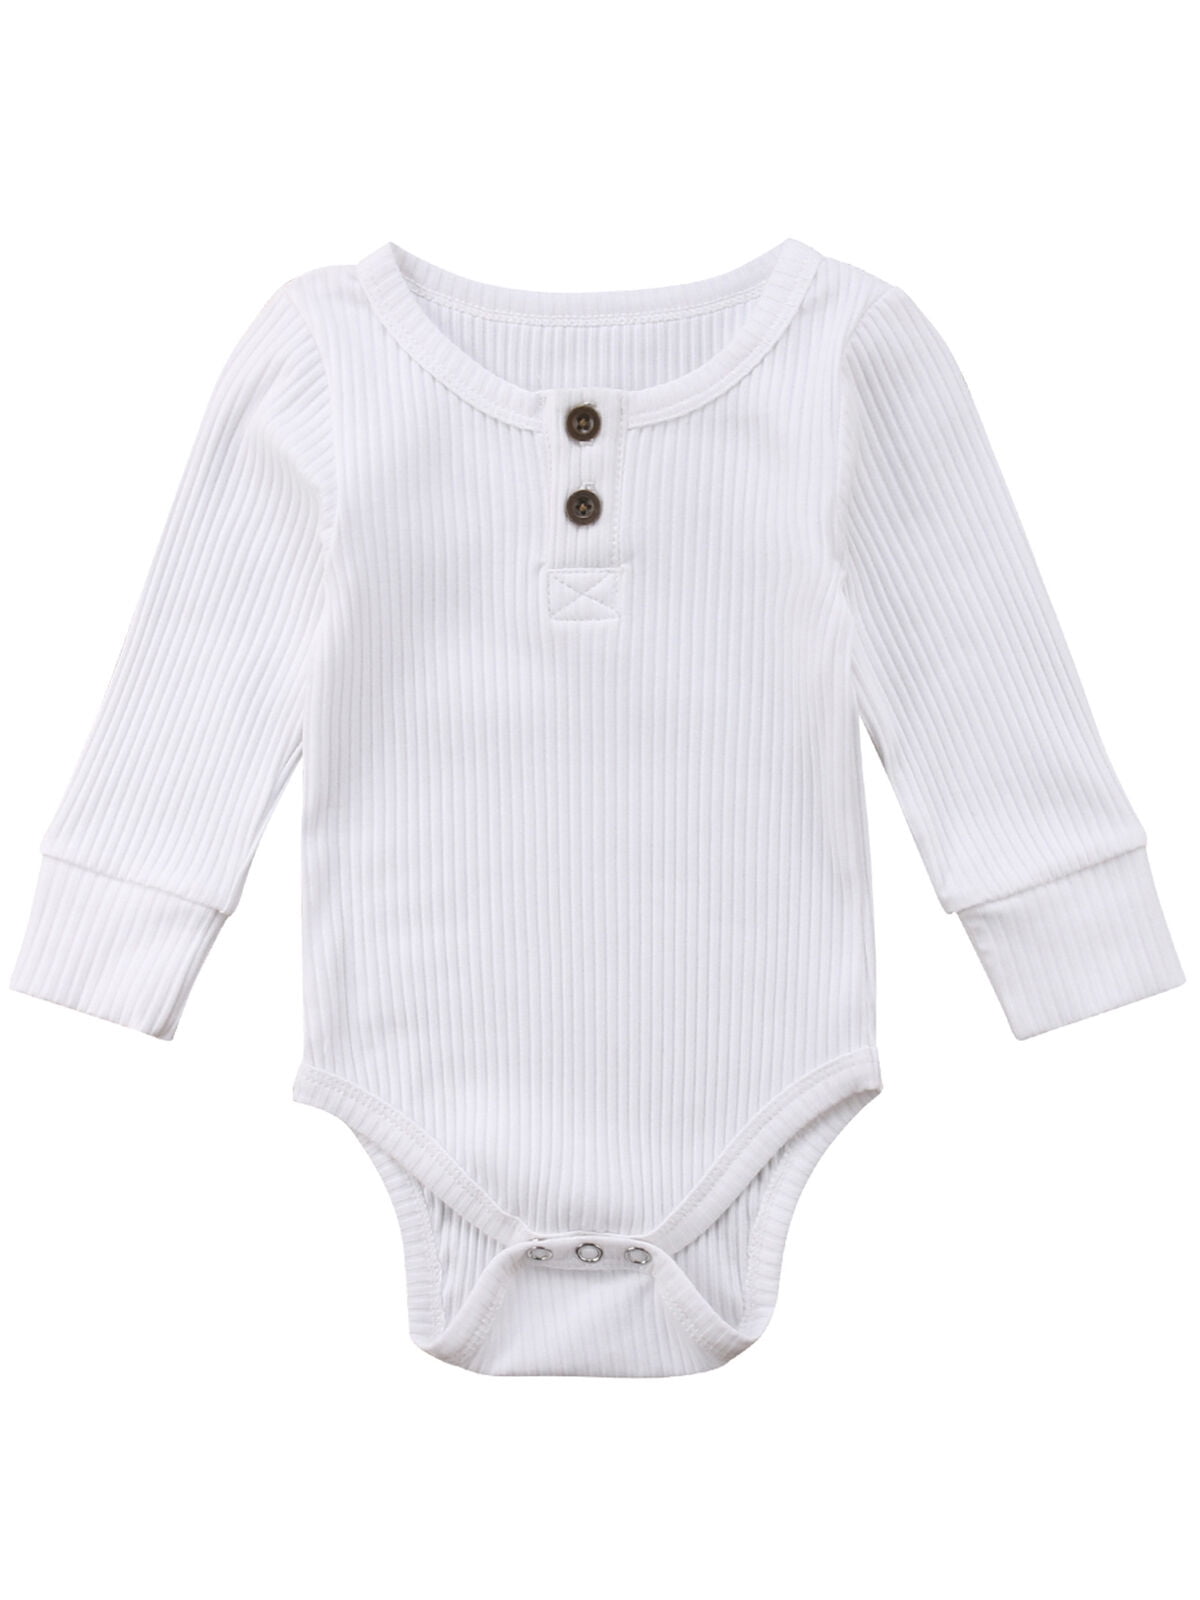 Newborn Baby Unisex Jumpsuit Cotton Romper Long Sleeve One-Piece Bodysuits